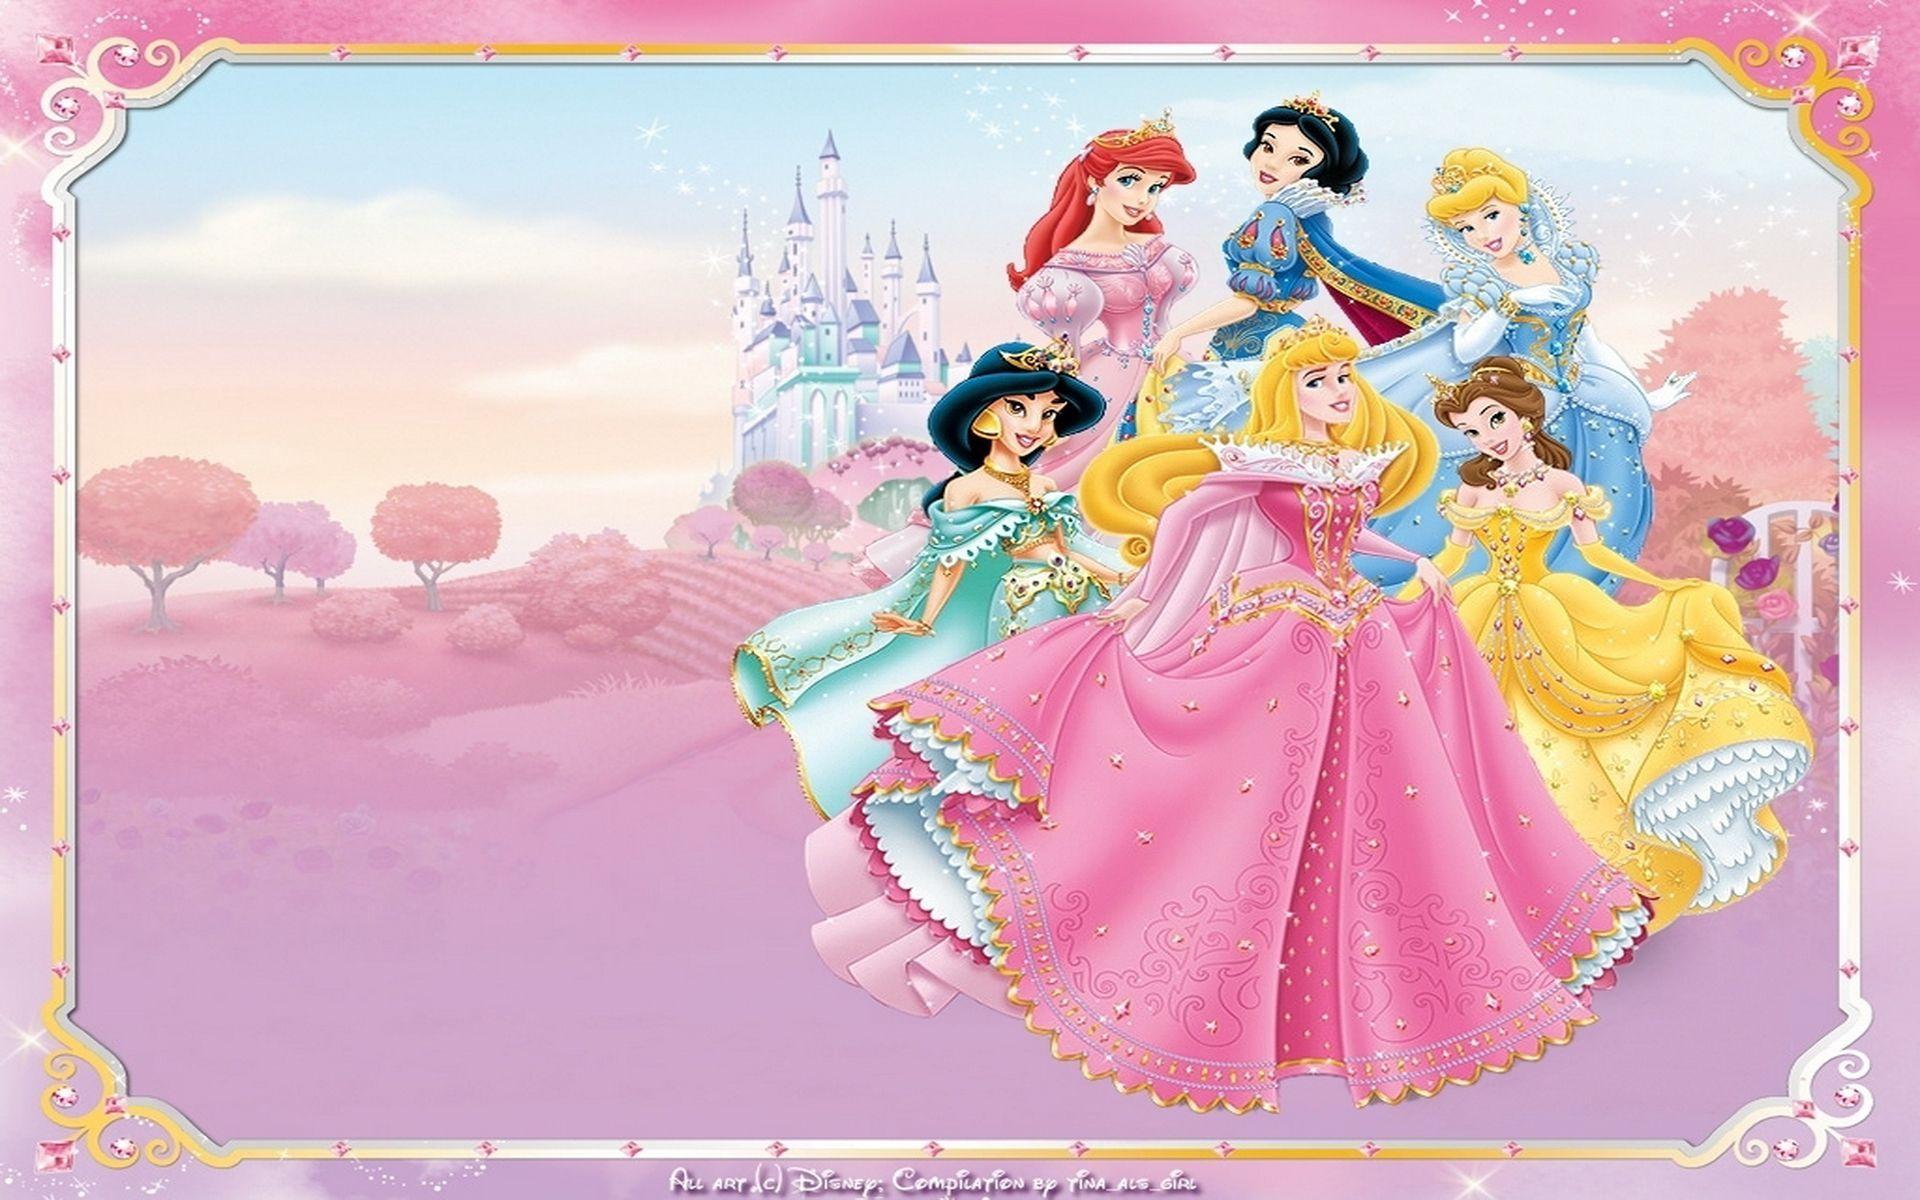 Disney Princess Wallpaper. Princess birthday invitations, Princess invitations, Disney princess wallpaper